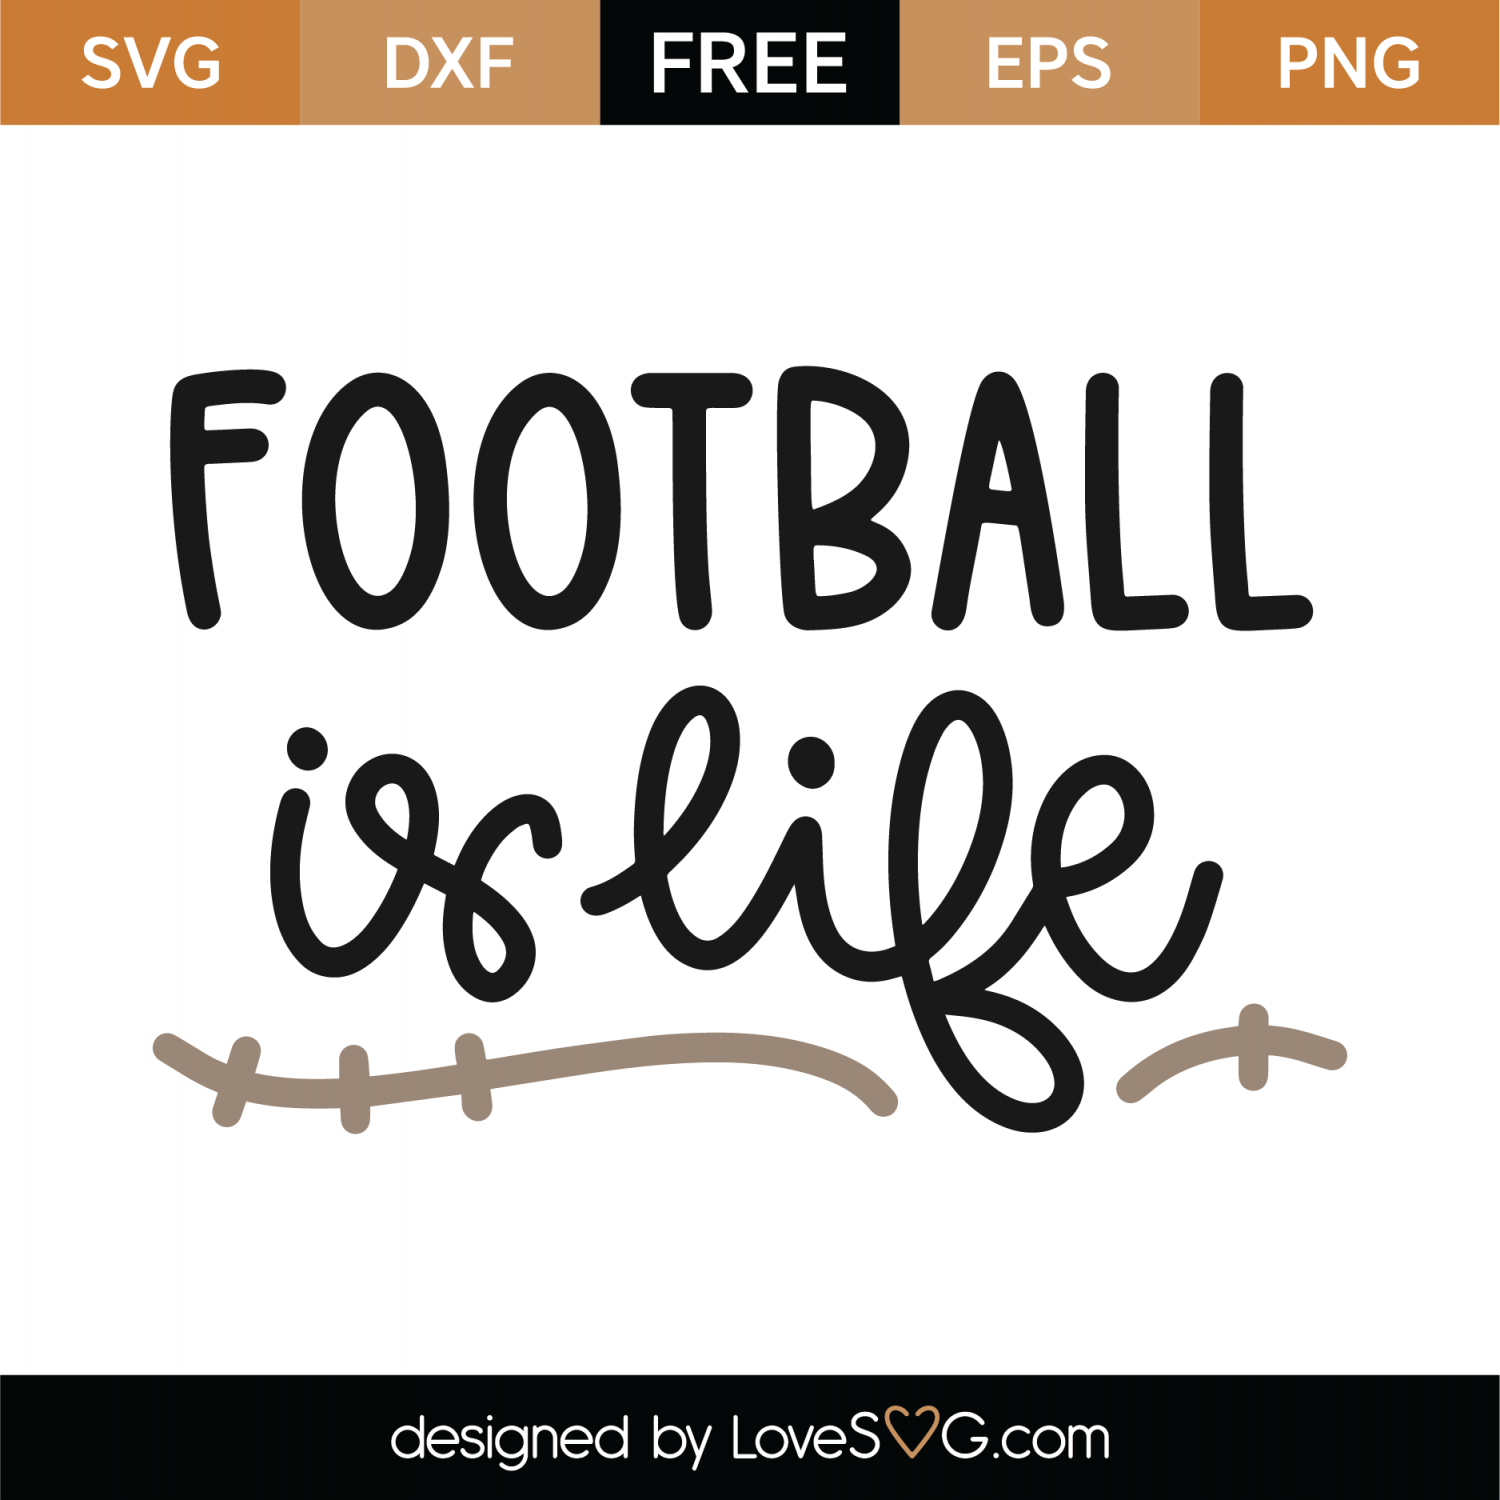 Download Free Football Is Life SVG Cut File | Lovesvg.com